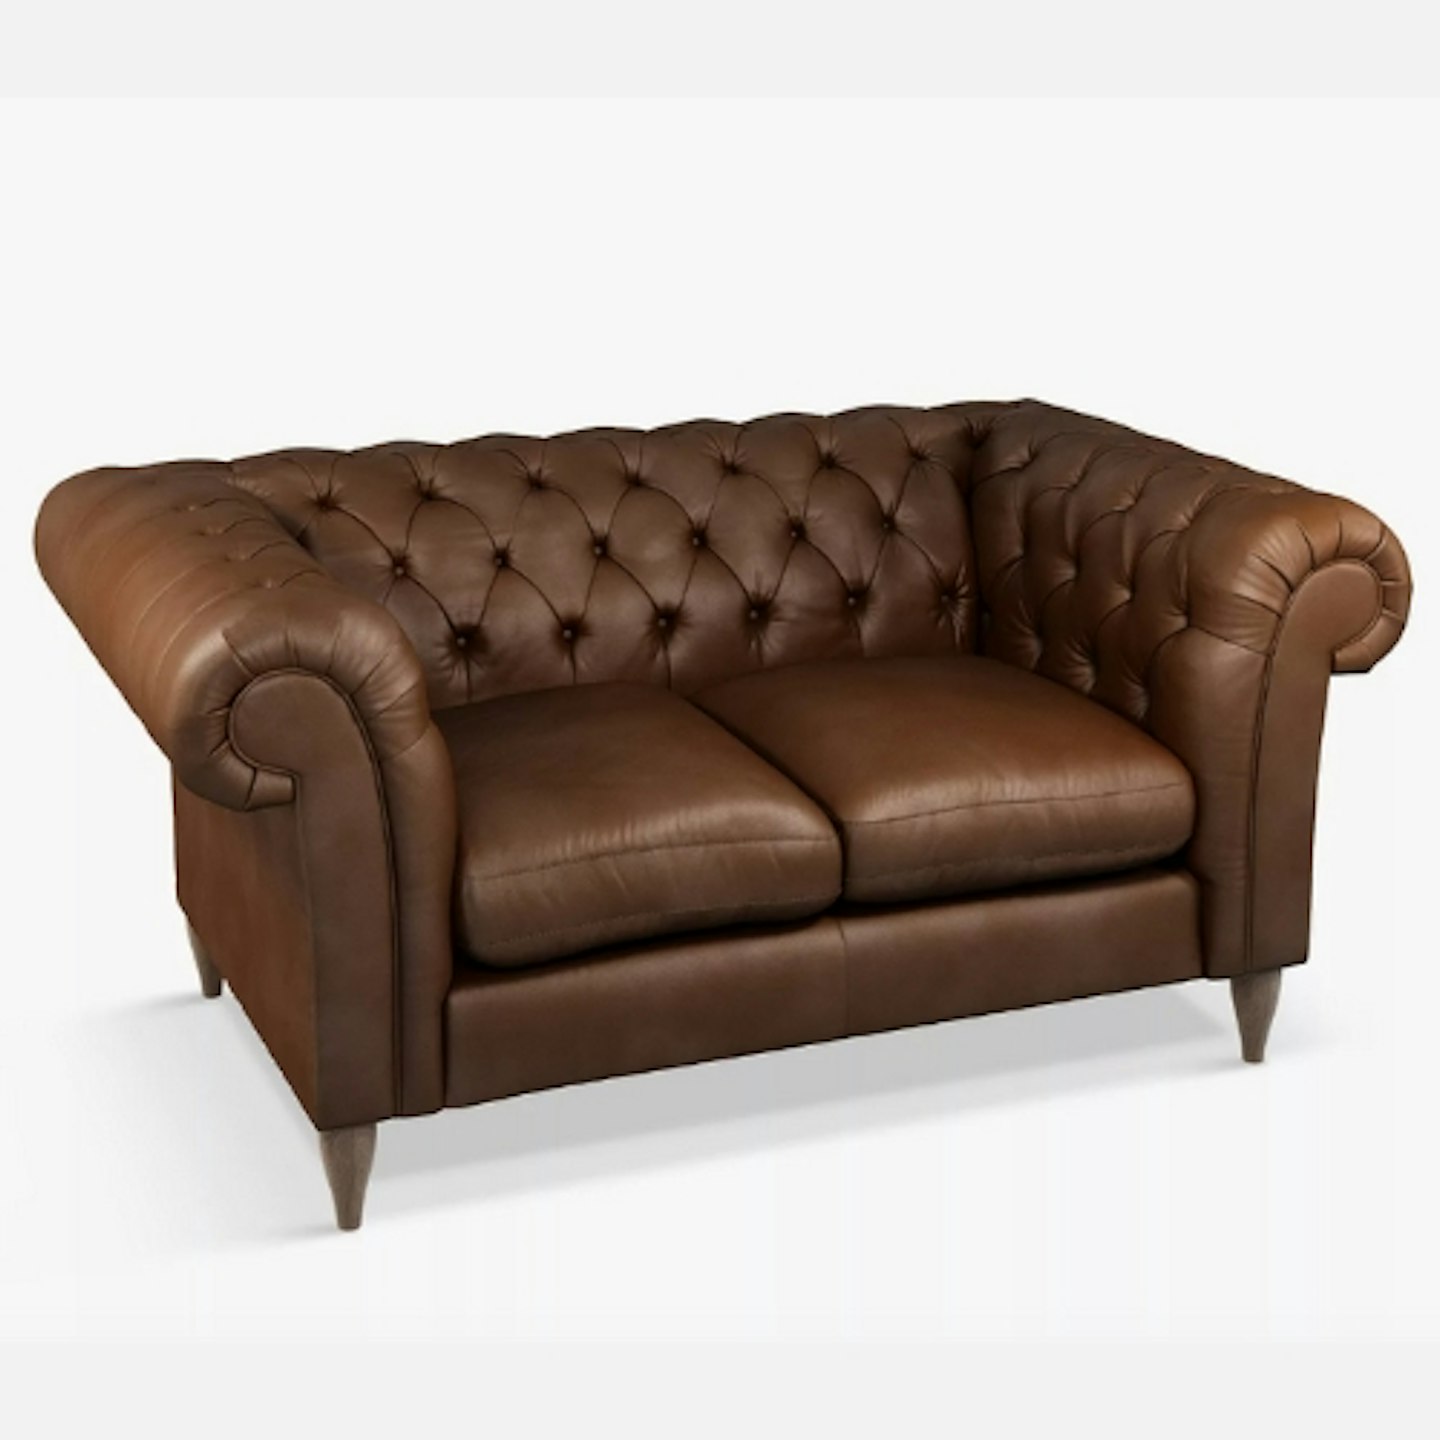 John Lewis Cromwell Chesterfield Small 2 Seater Leather Sofa, Dark Leg